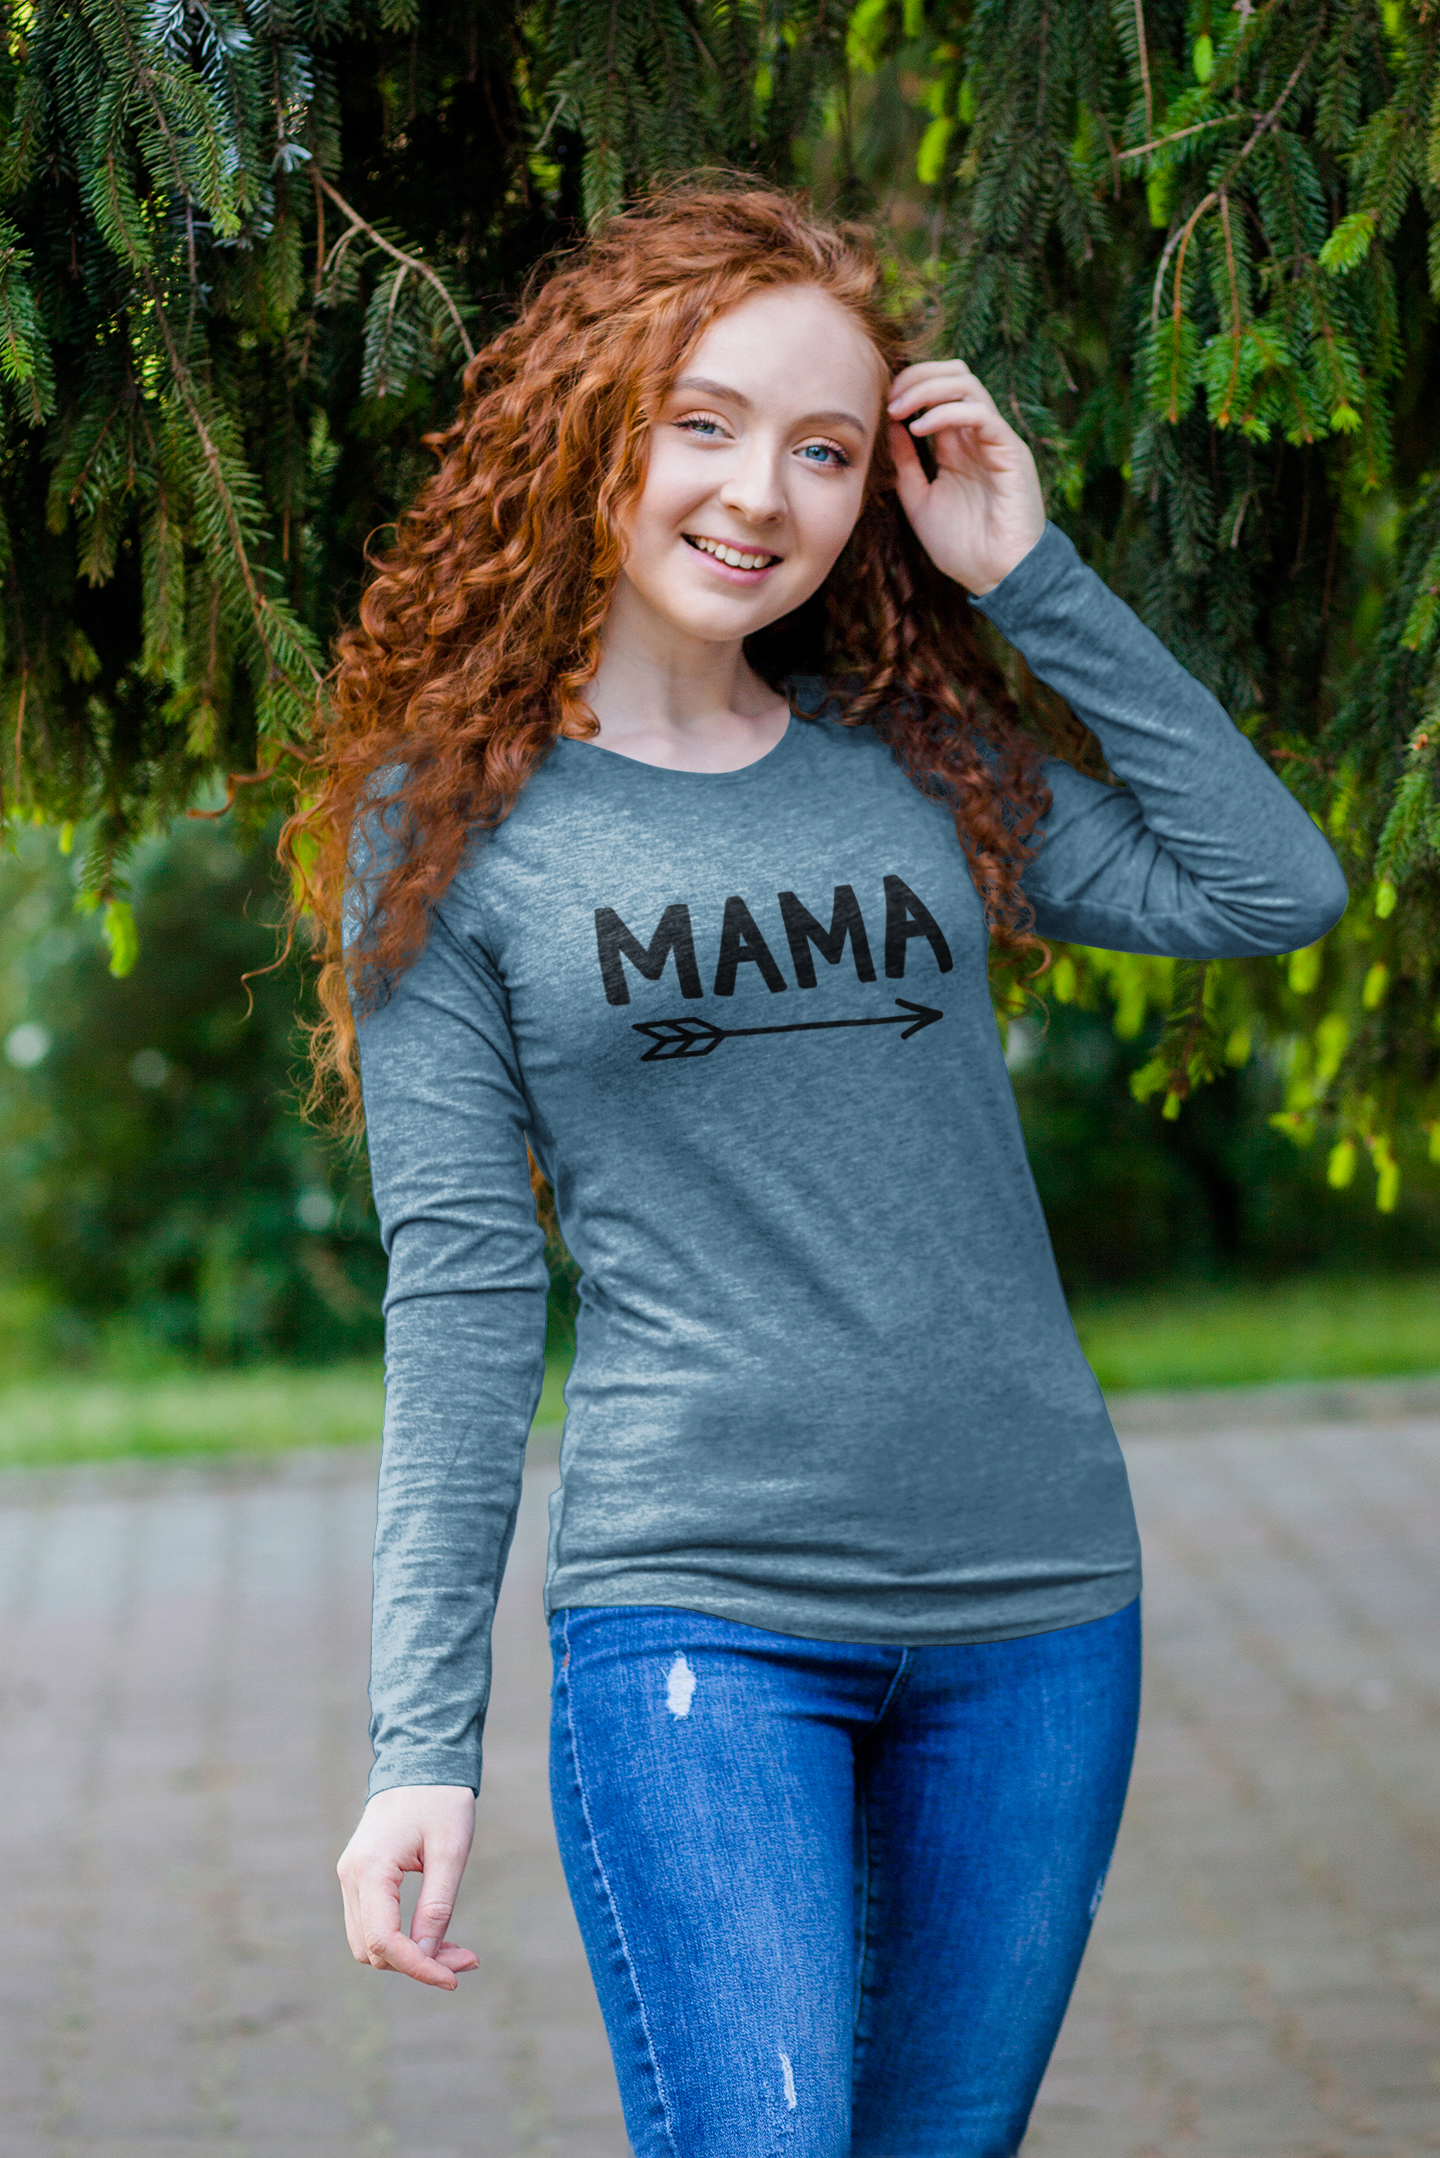 Mama Long Sleeve Shirt on a female model in a greenery setting wearing the shirt.